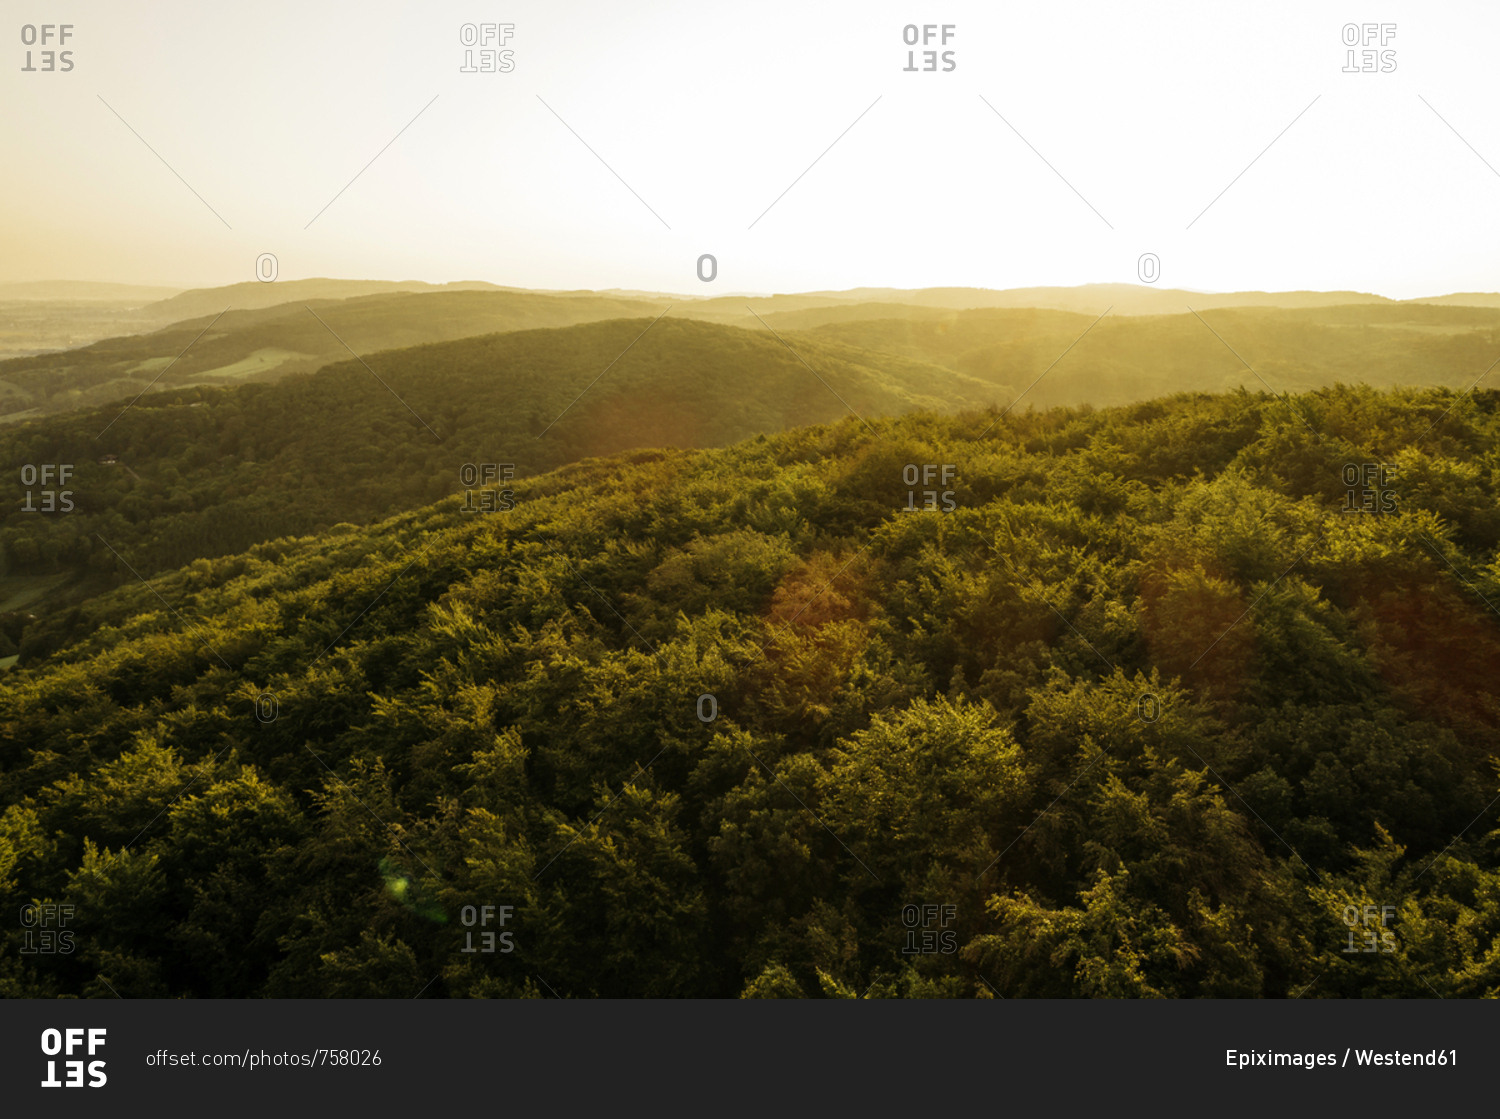 Austria- Lower Austria- Vienna Woods- Biosphere Reserve Vienna Woods- Aerial view of forest at sunrise